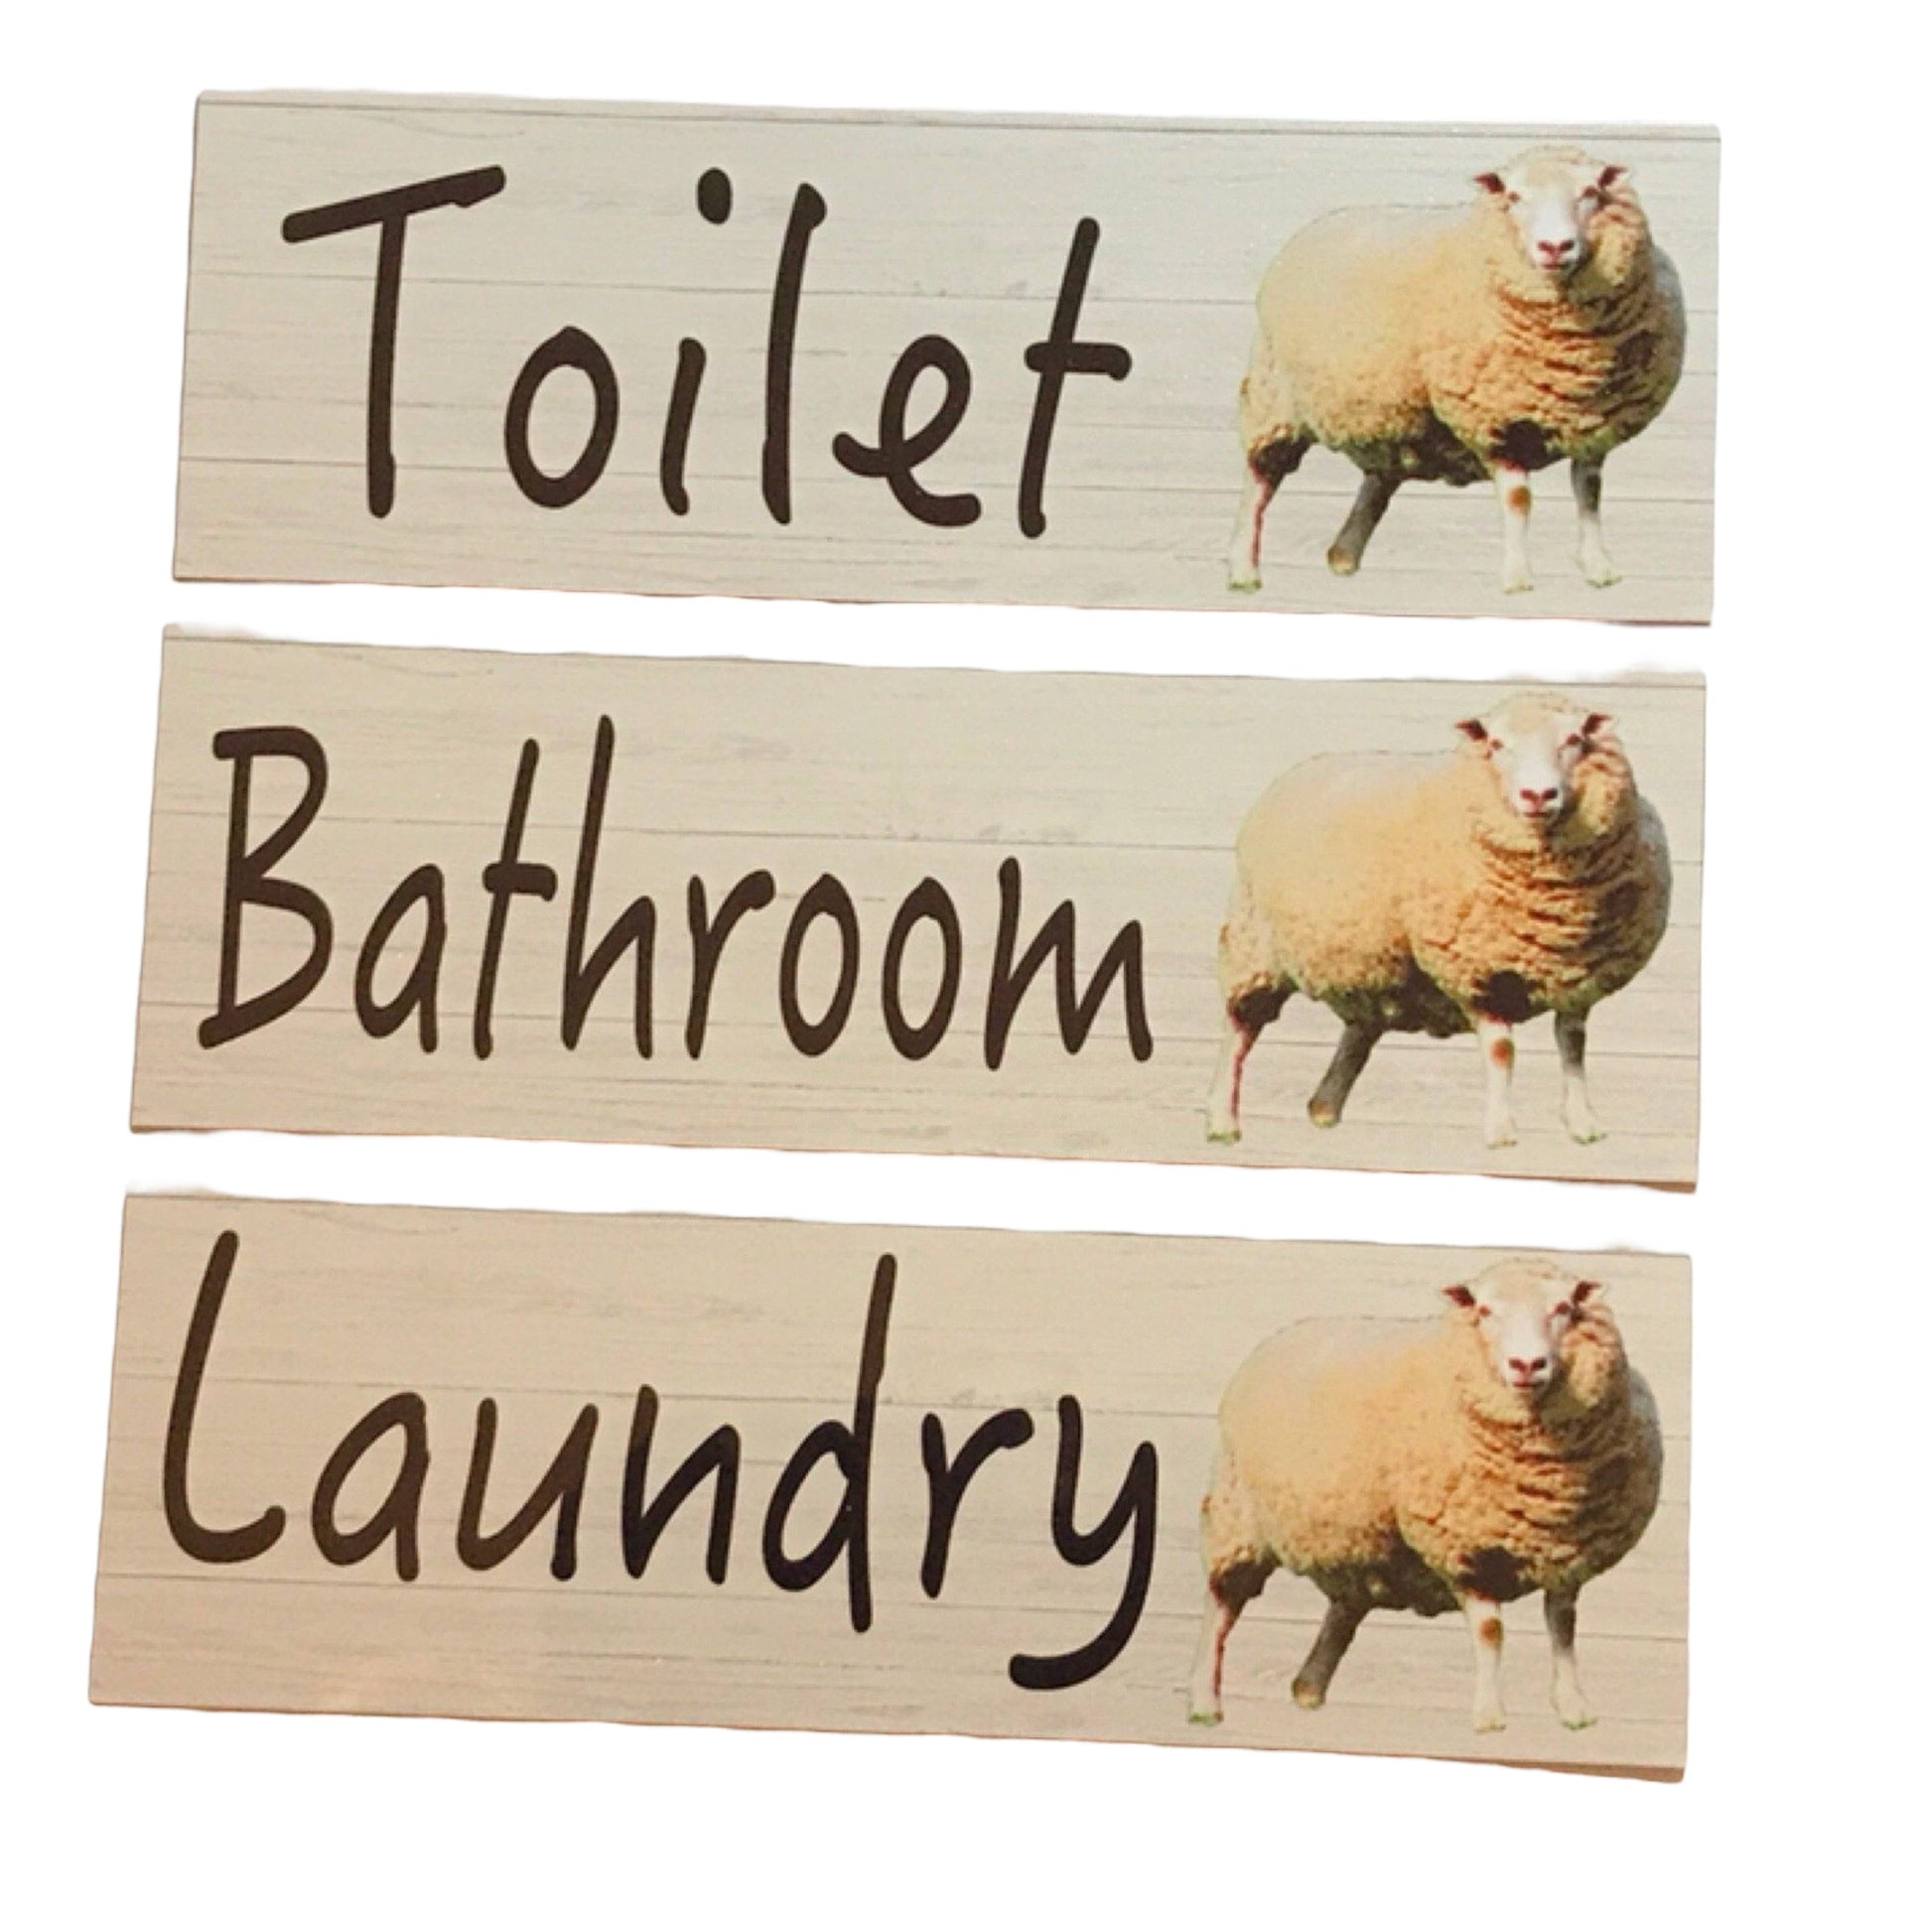 Sheep Ewe Door Sign Toilet Laundry Bathroom - The Renmy Store Homewares & Gifts 